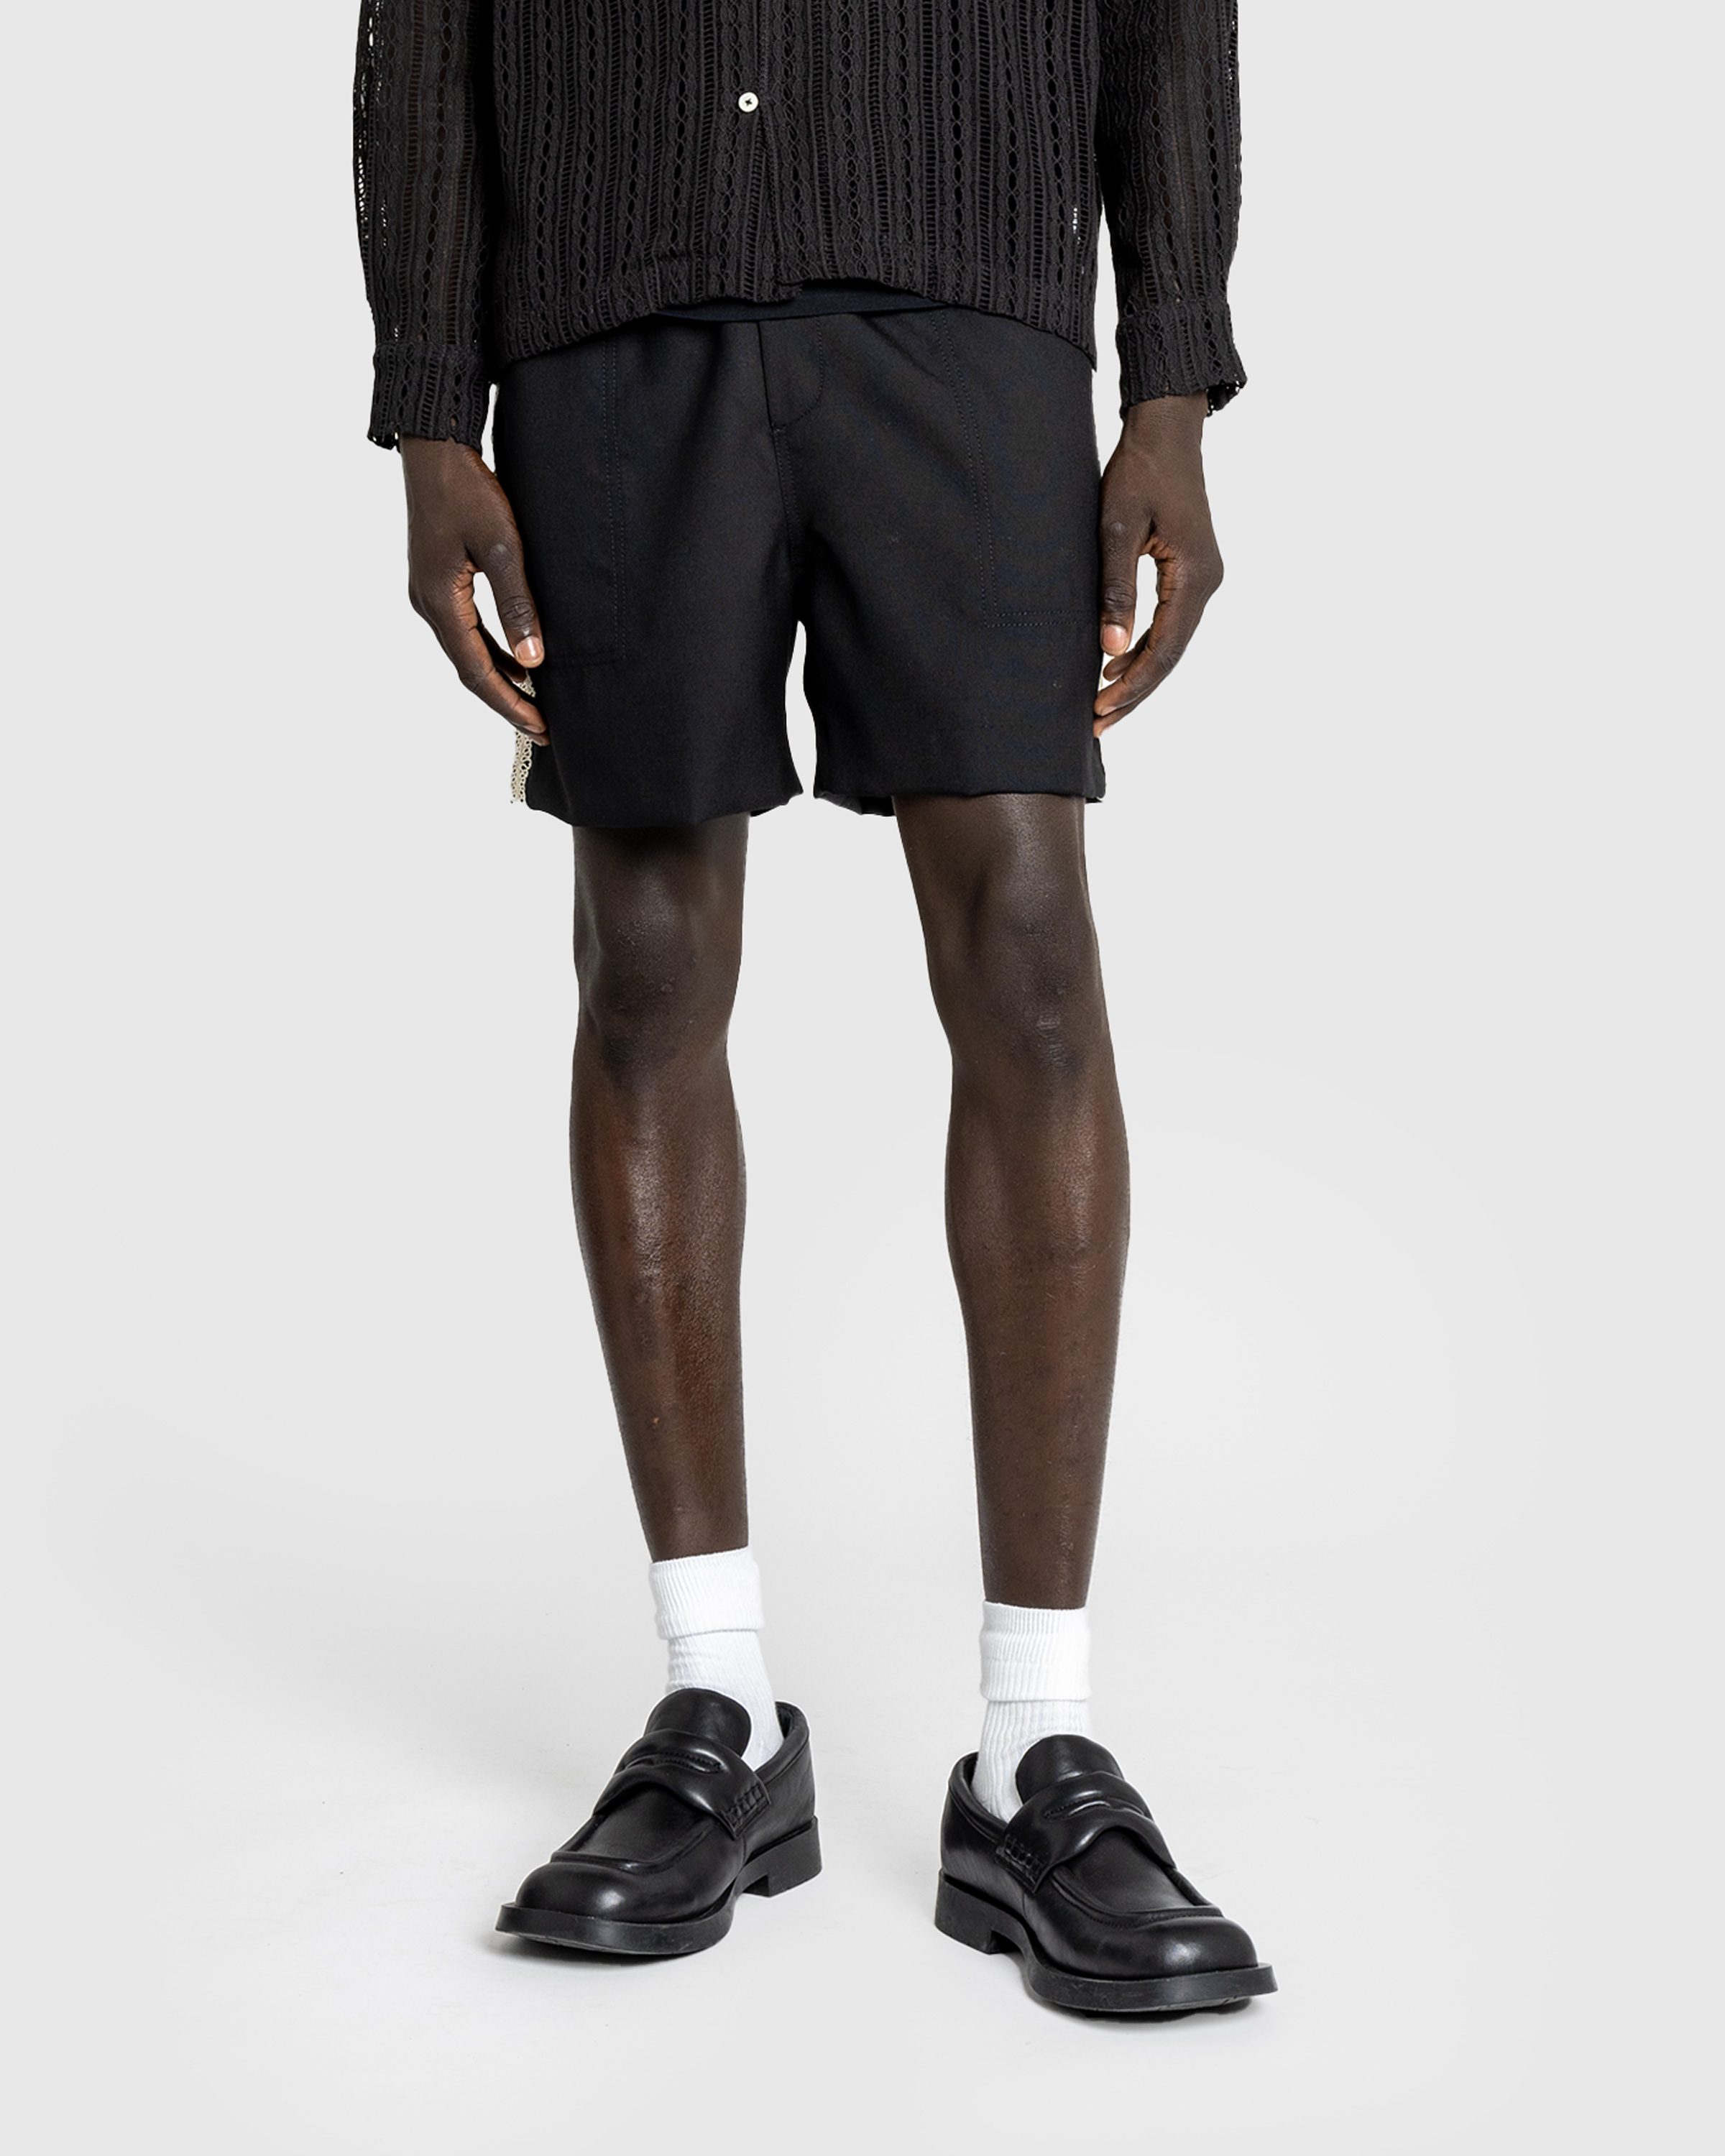 Bode – Lacework Shorts Black - Short Cuts - Black - Image 2